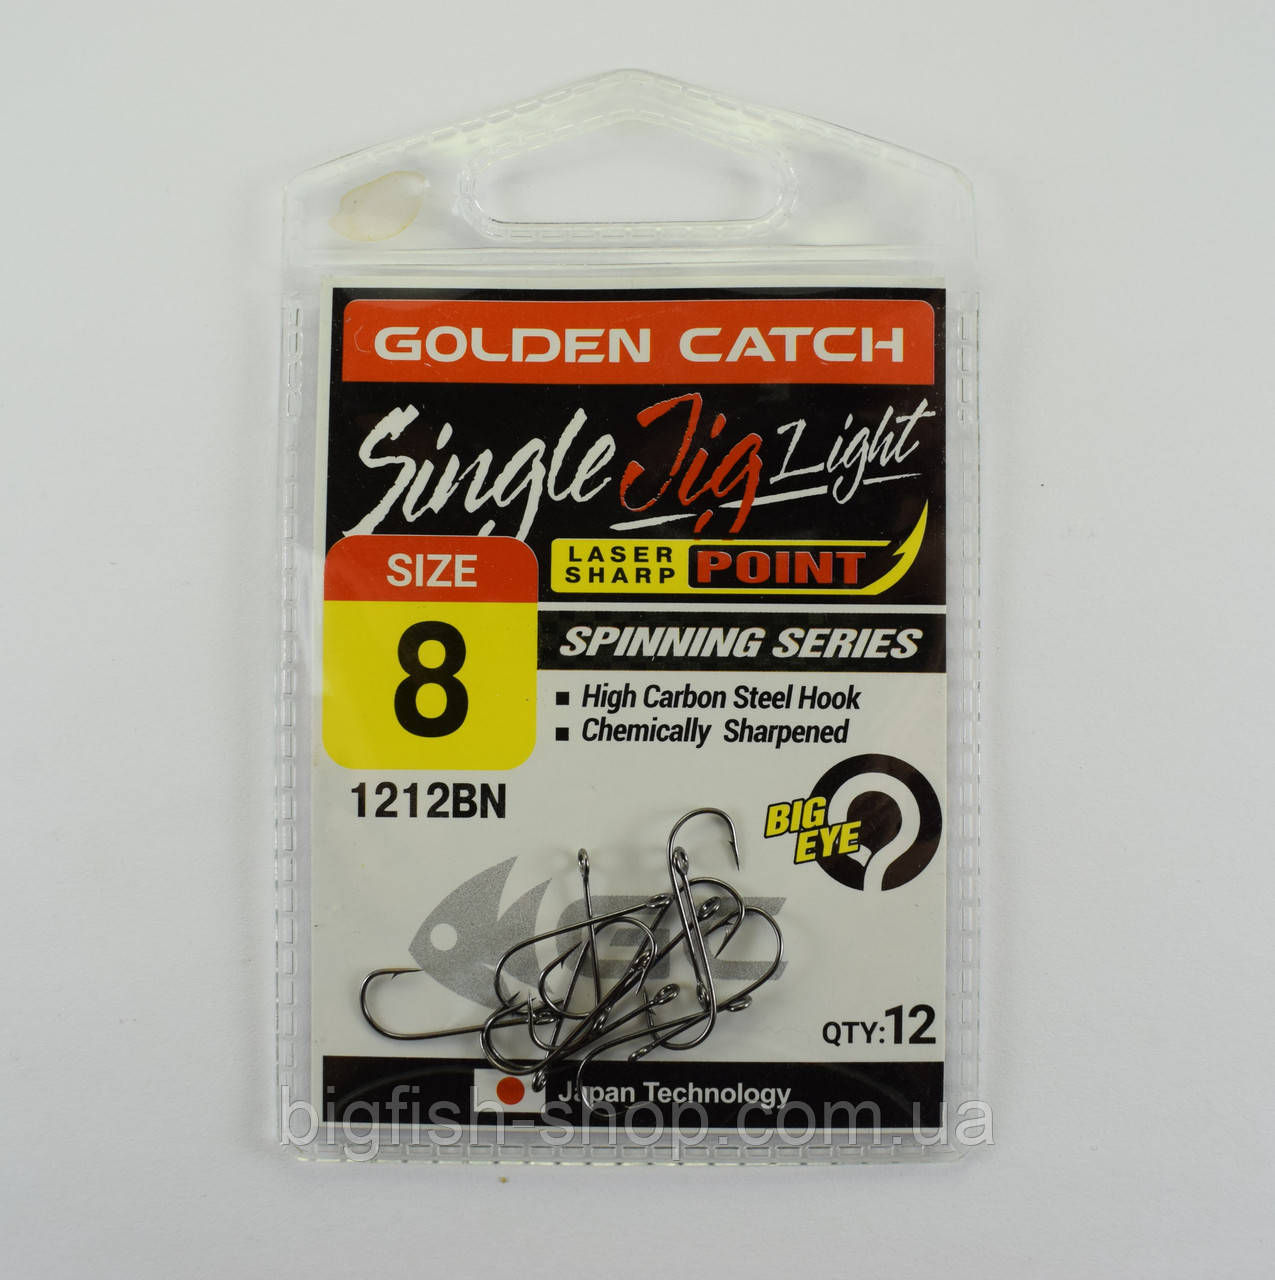 Гачки Golden Catch "Single Jig Light" 1212bn No 8